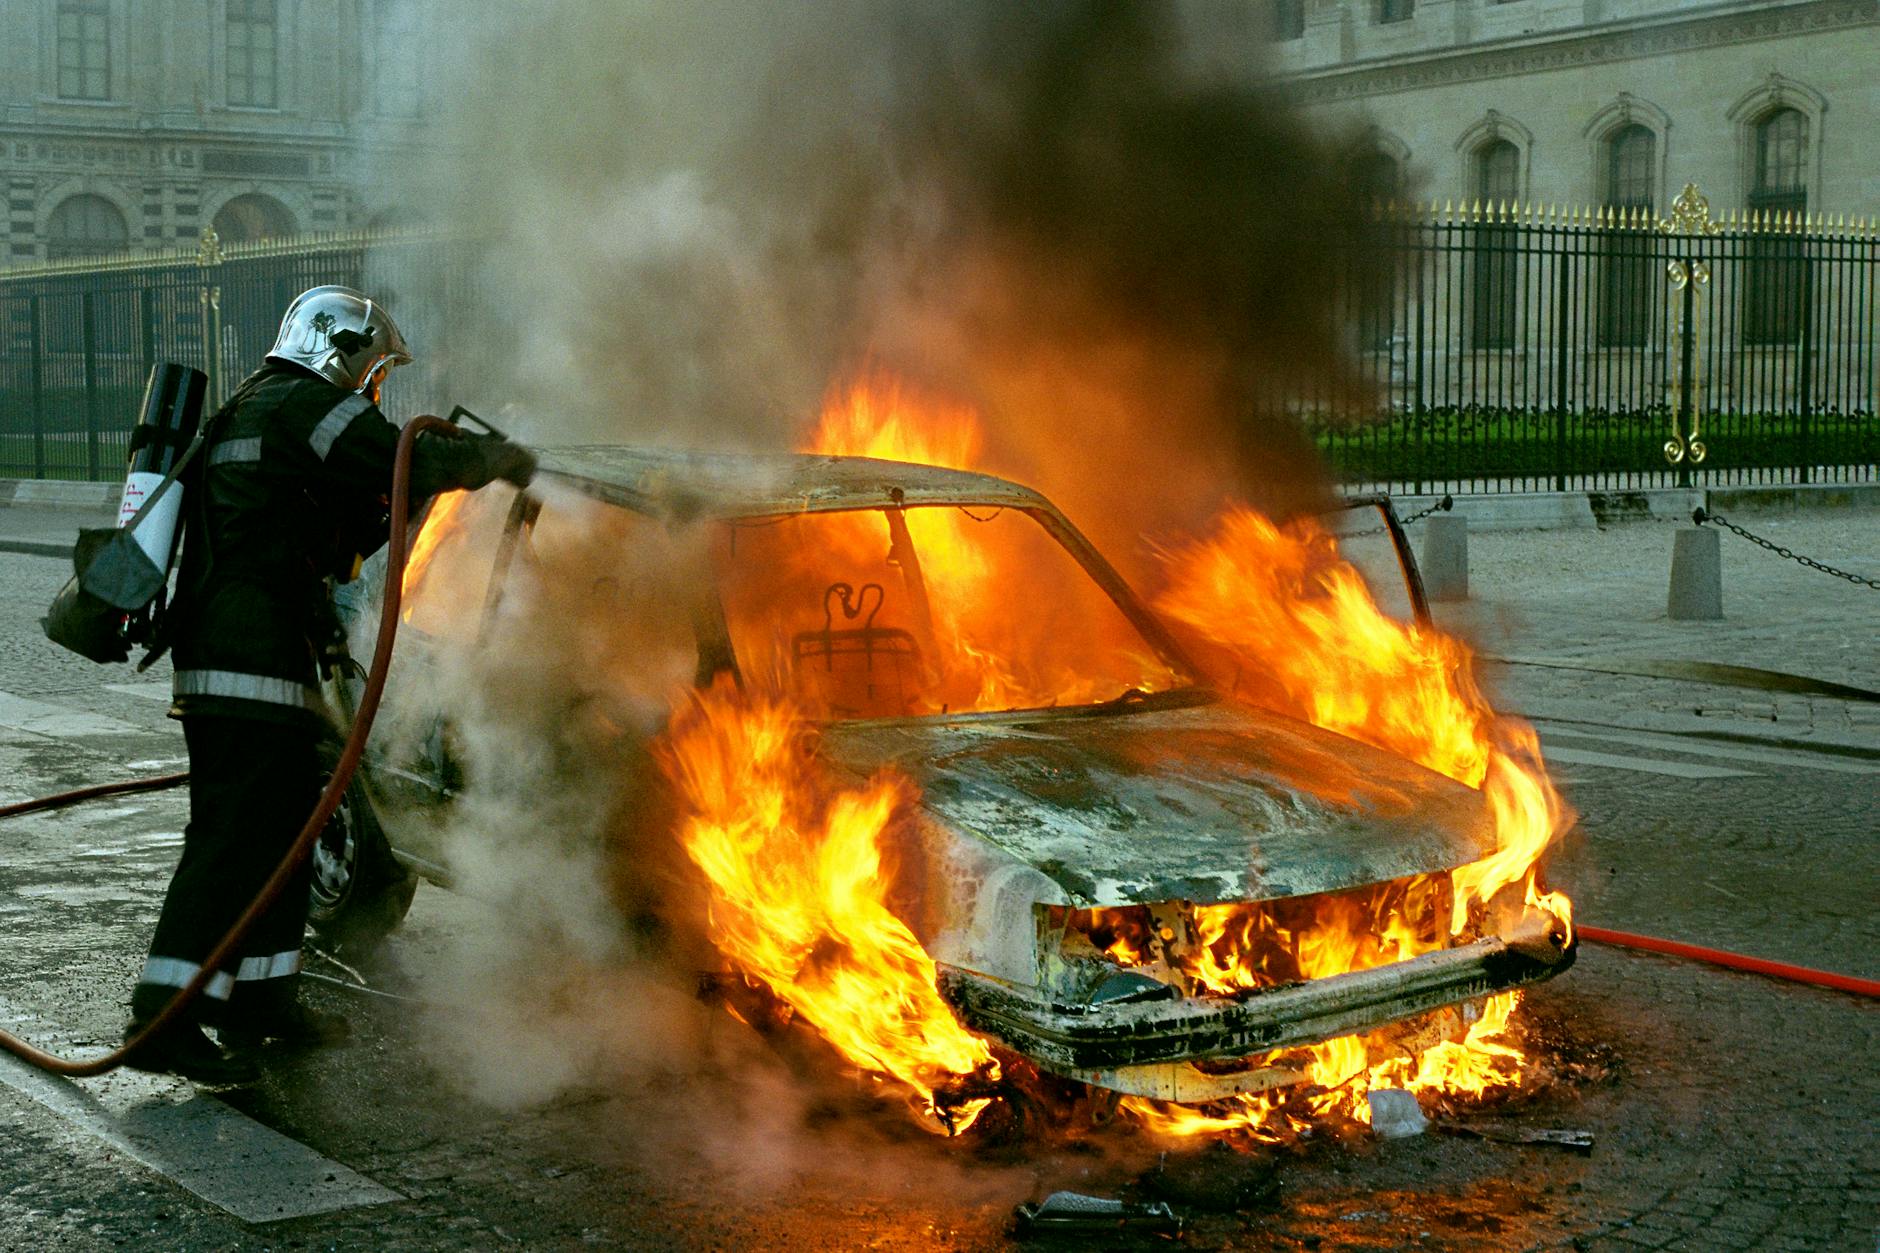 a fireman extinguishing a car on fire